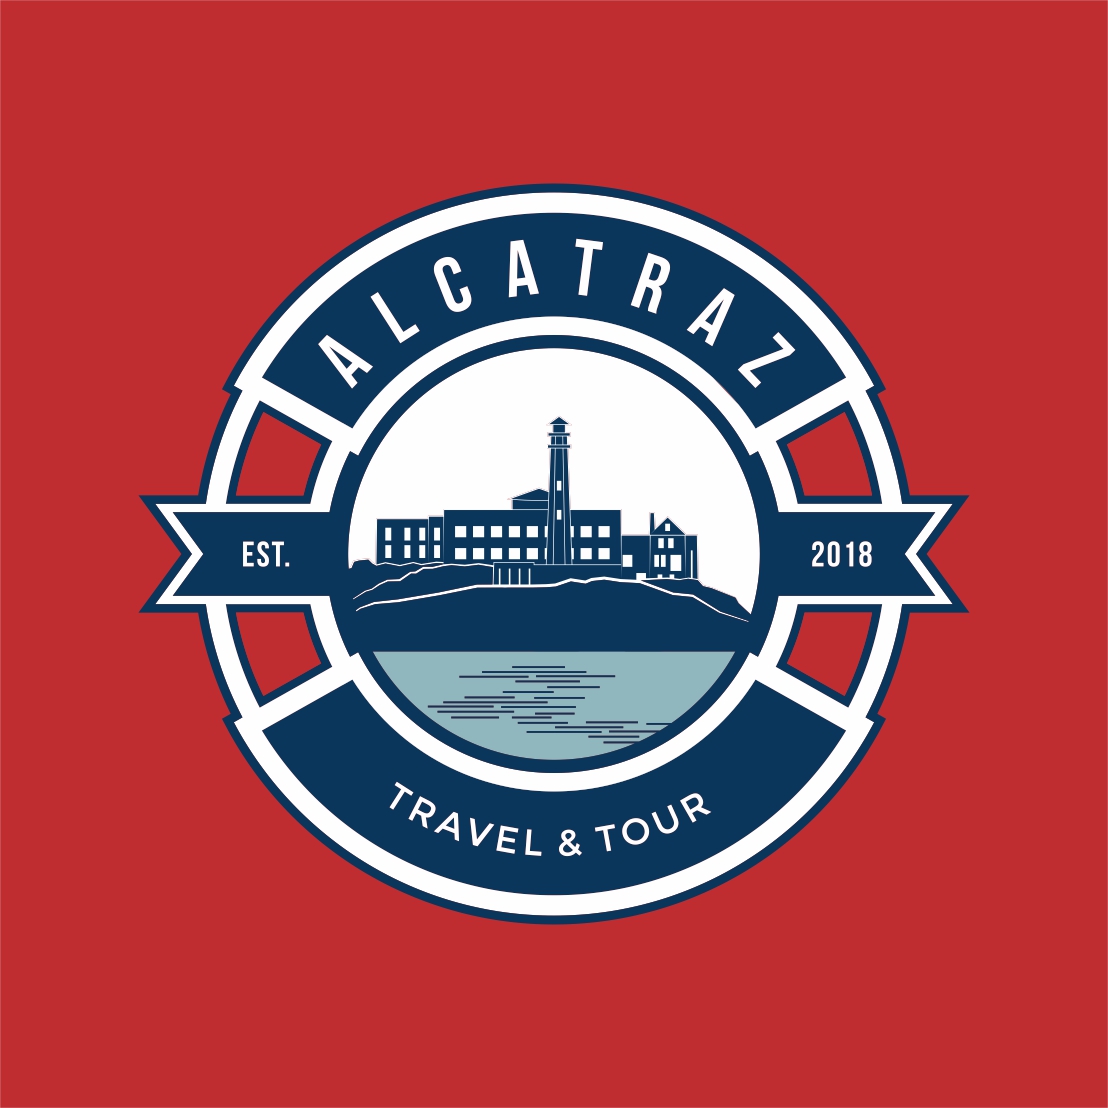 Alcatraz prison tour logo design template - only 8$ preview image.